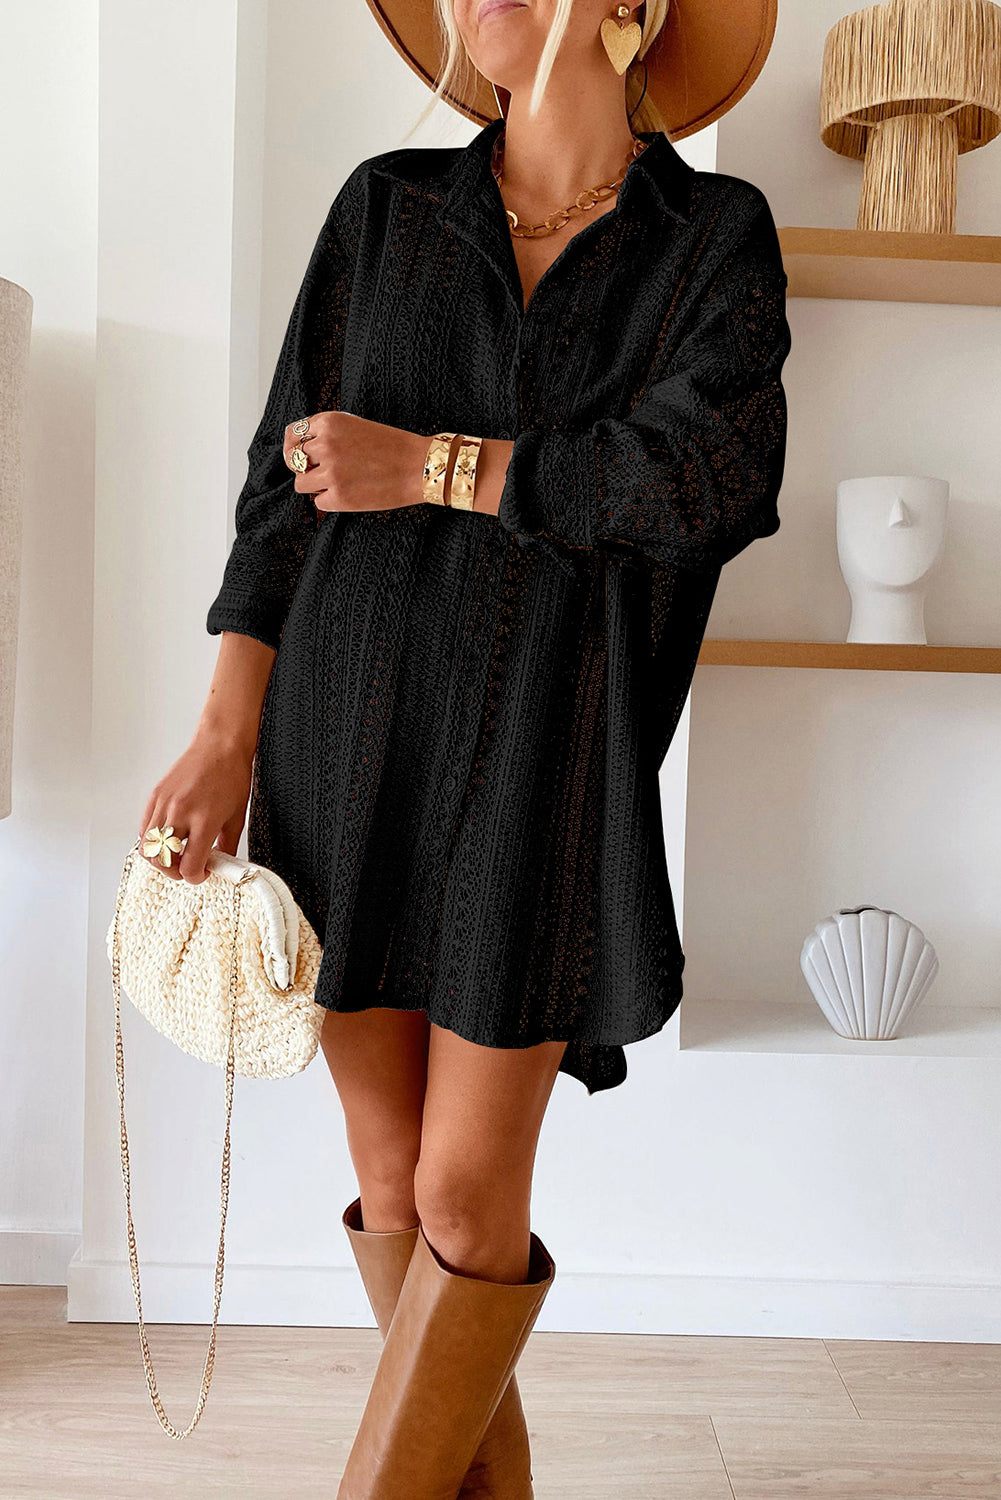 Black Lace Crochet Collared Tunic Oversized Shirt